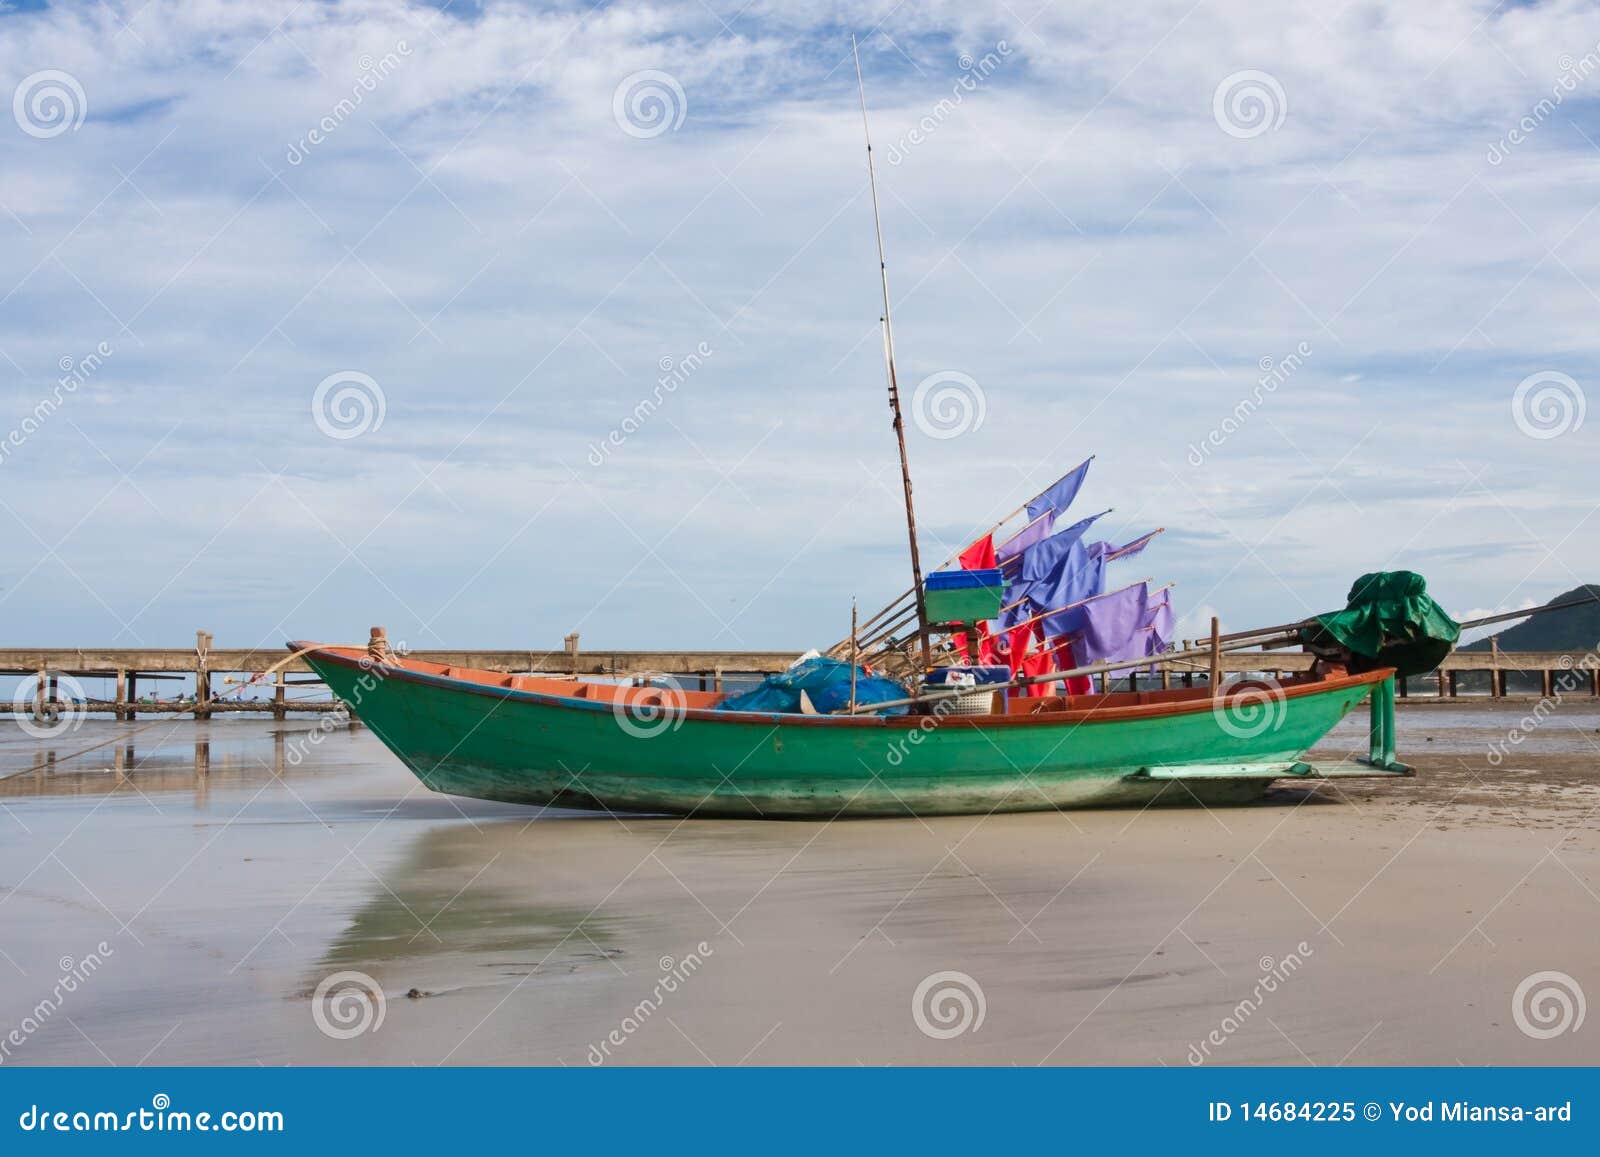 fishery boat